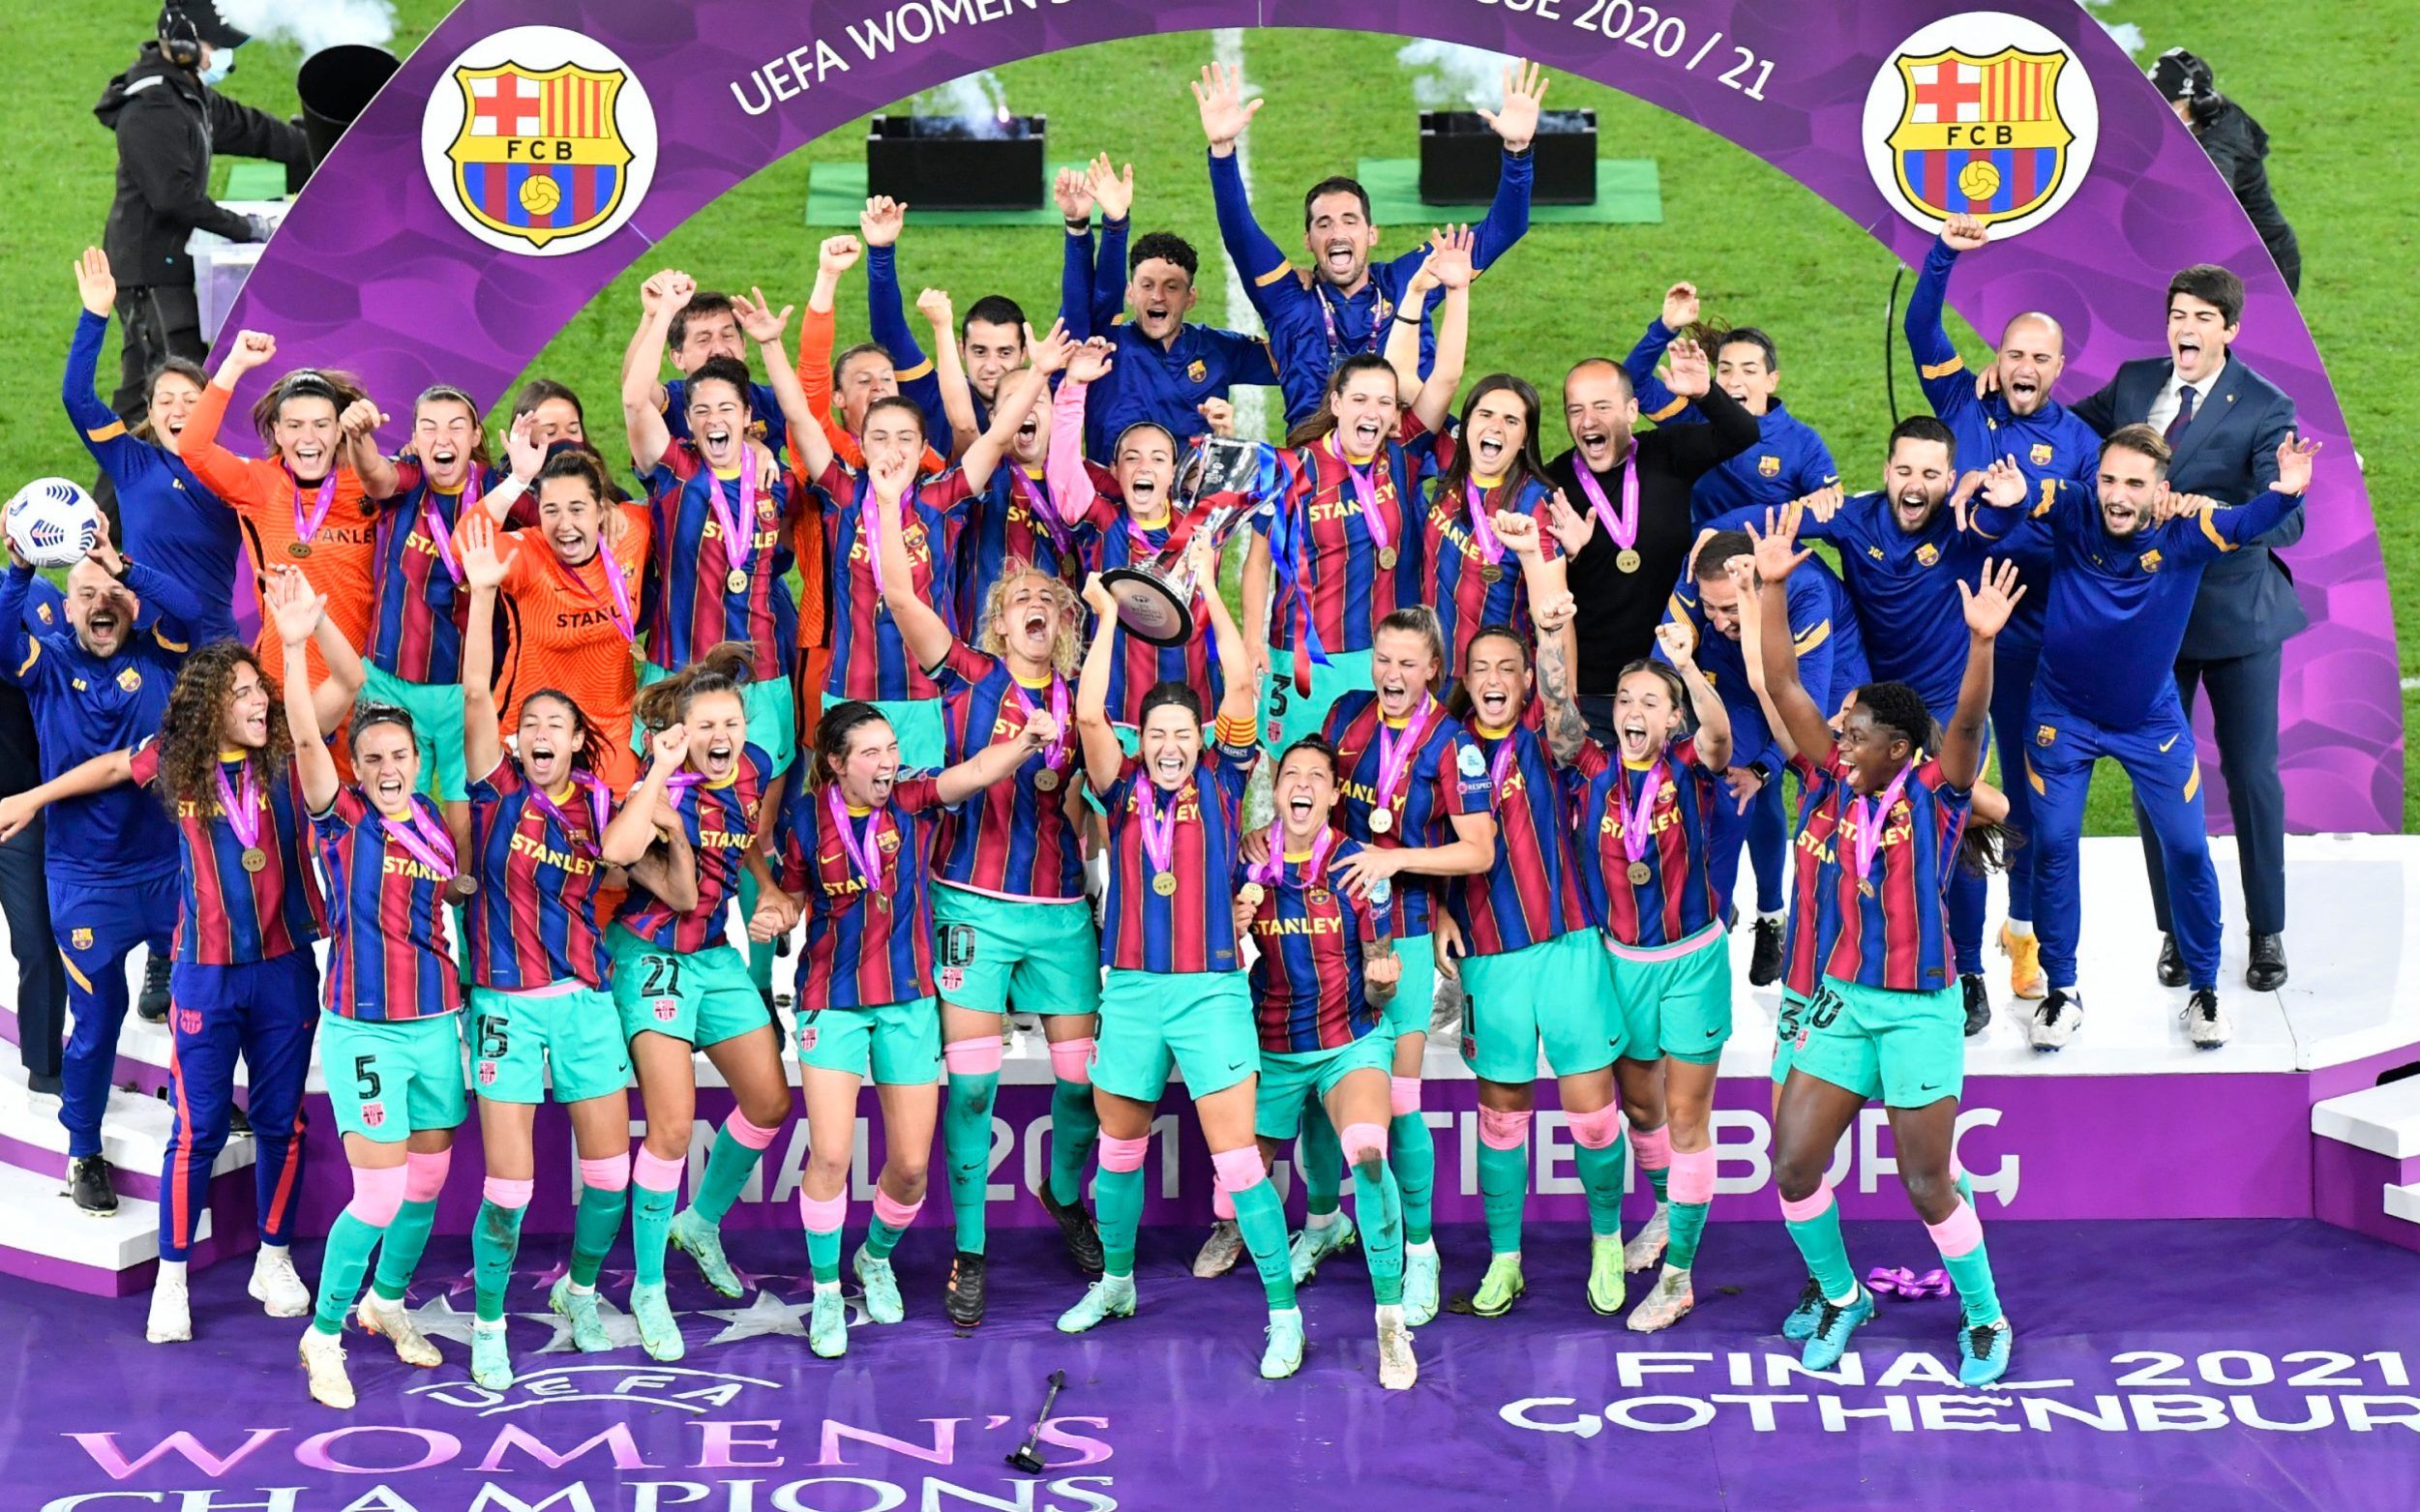 FC Barcelona Femení UEFA Women's Champions League 2021 Wallpapers